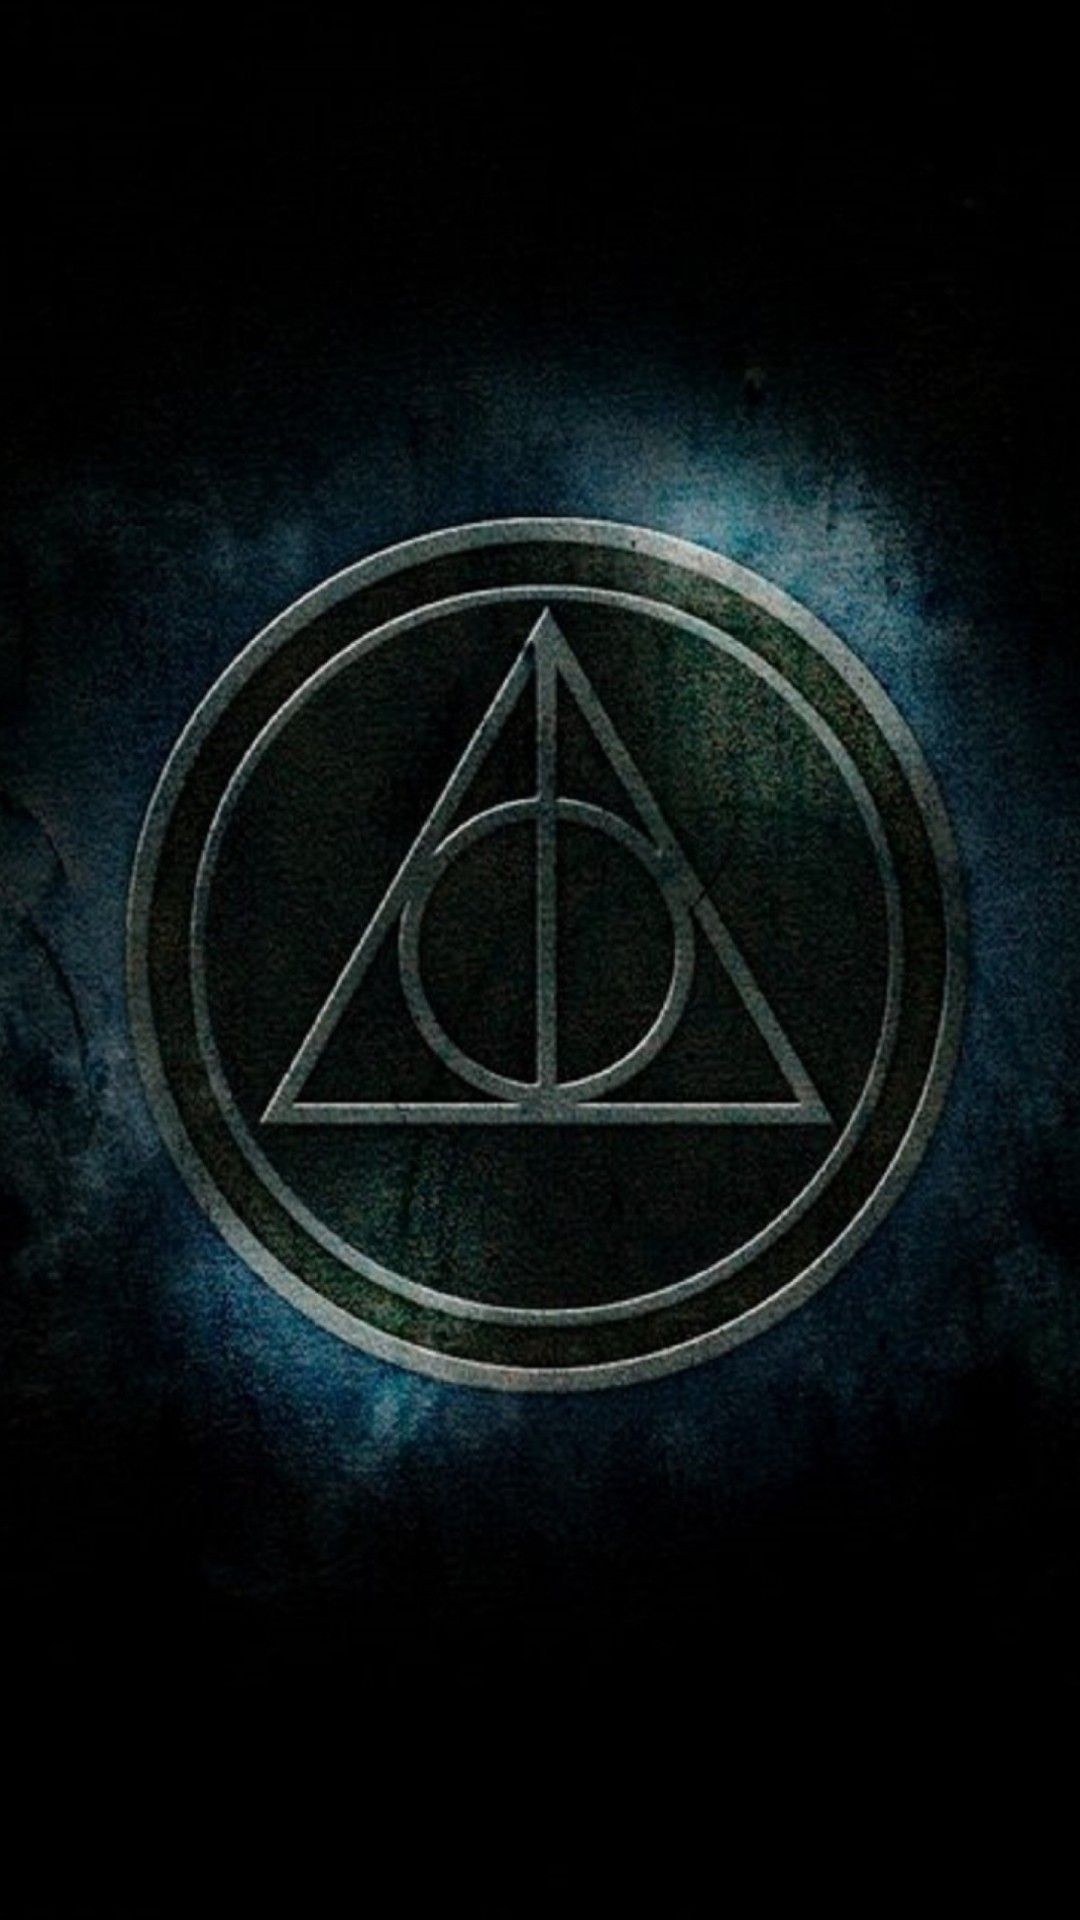 Harry Potter Wallpaper iPhone